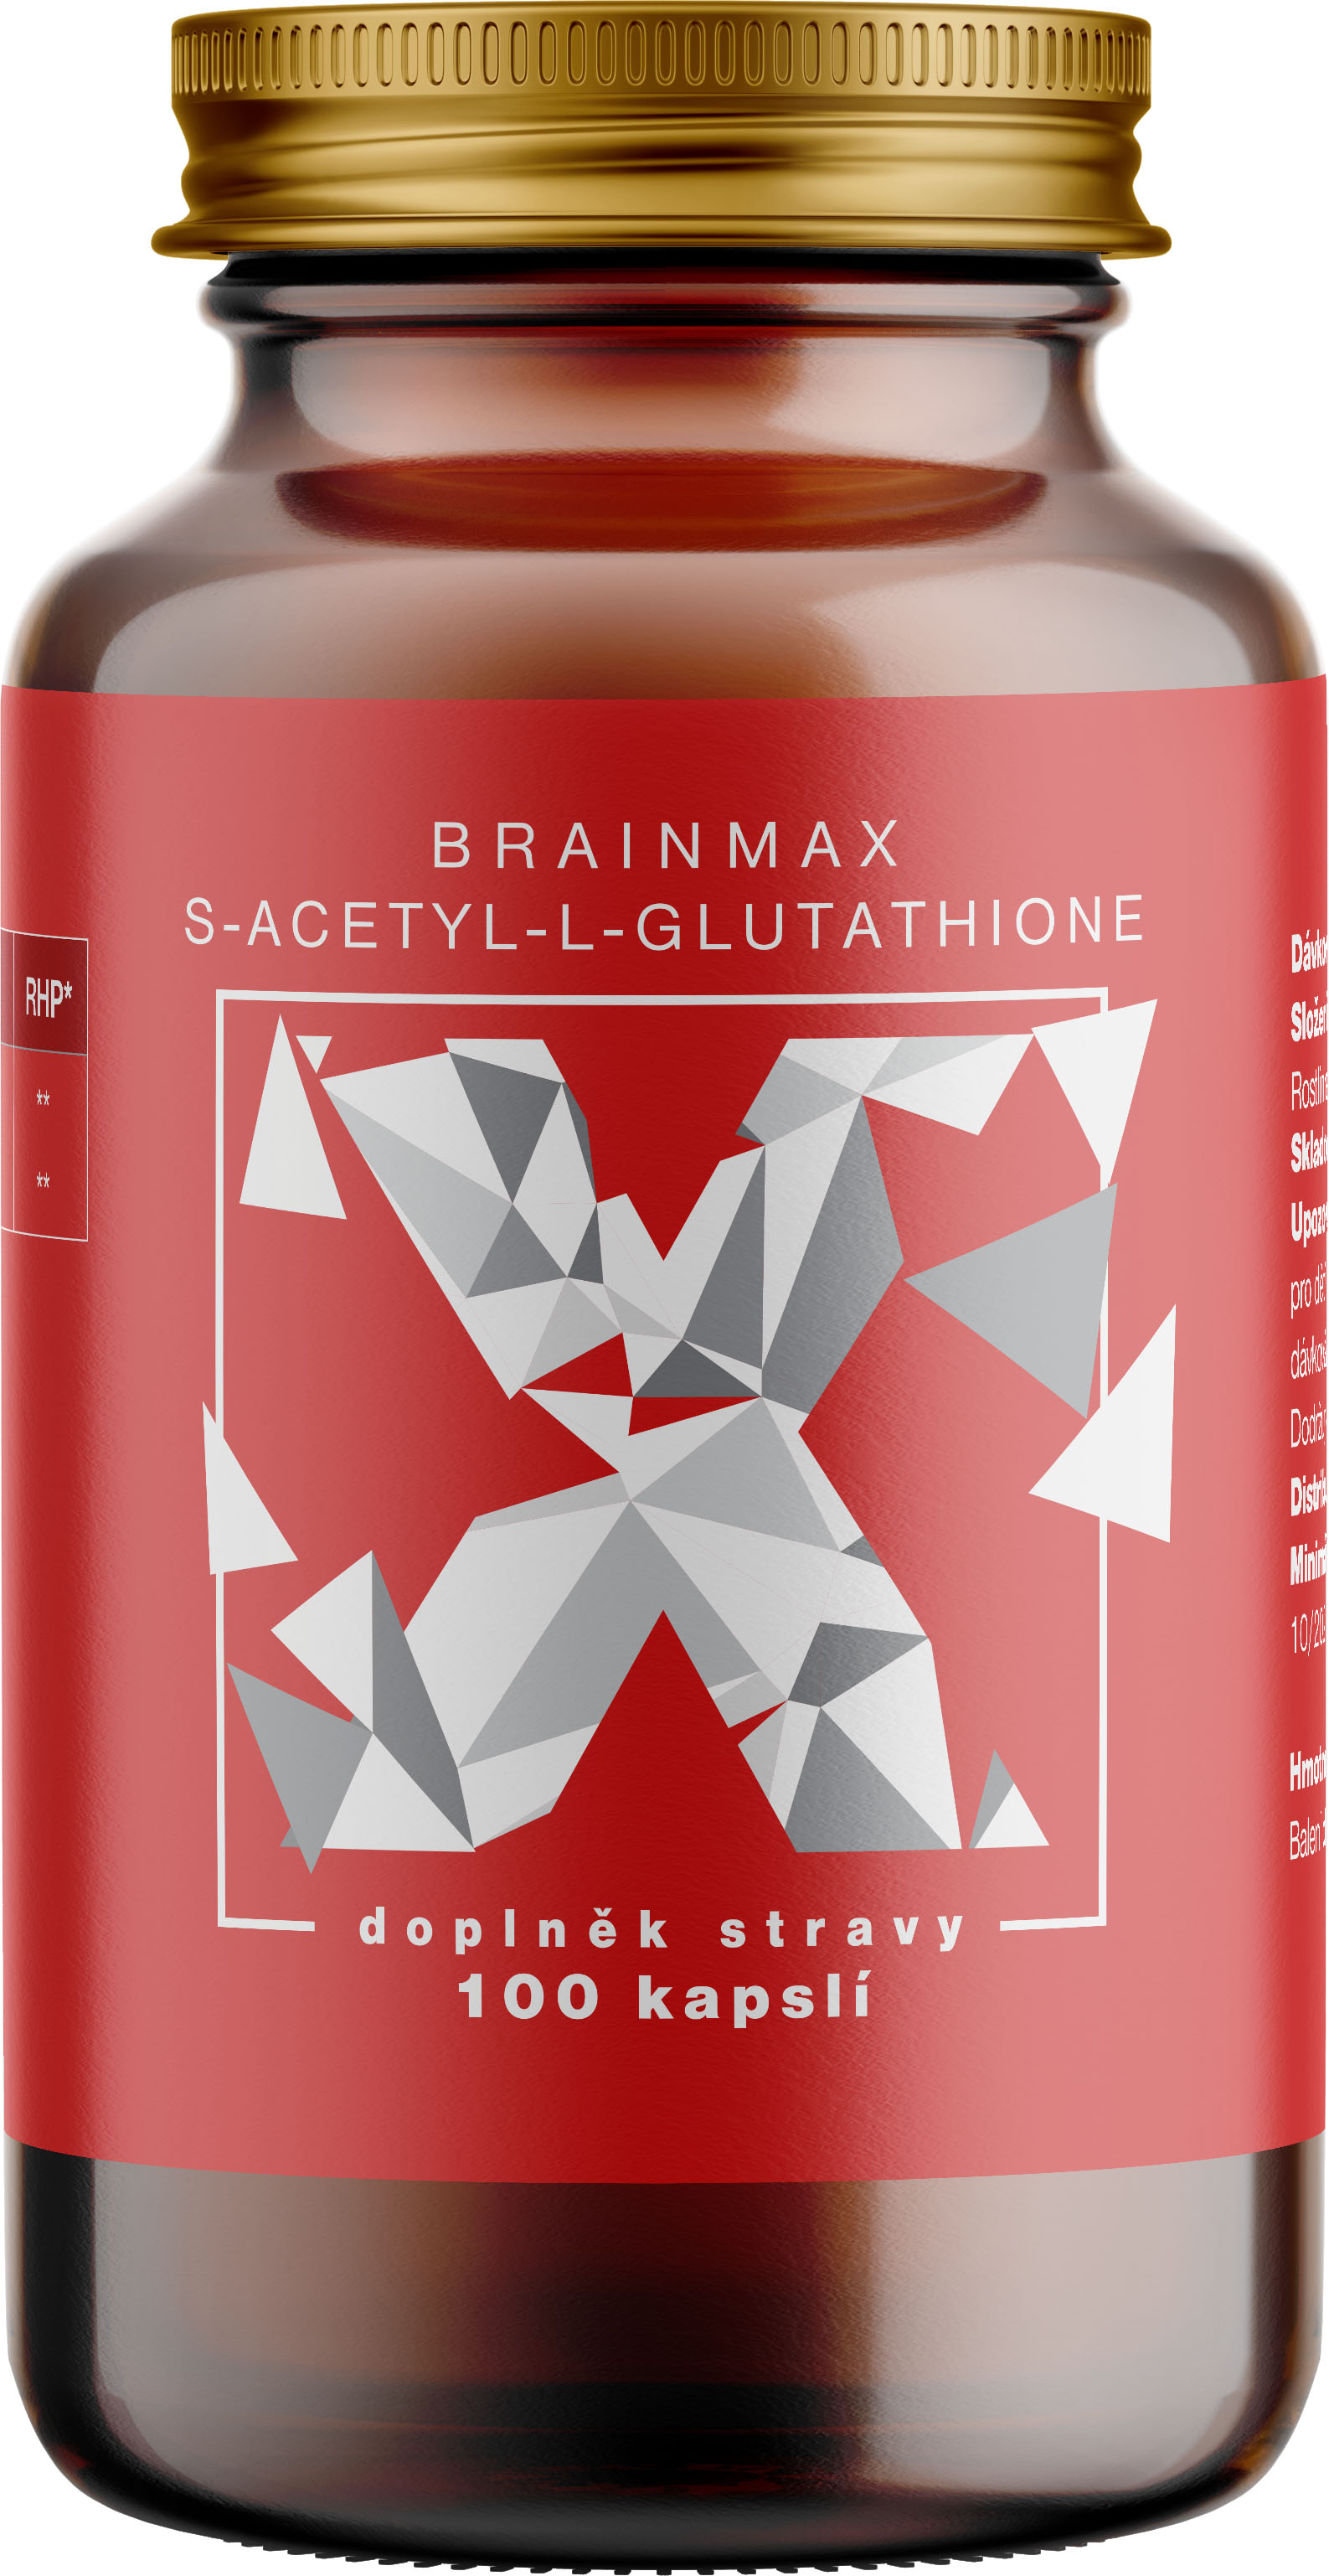 BrainMax S-Acetyl-L-Glutathione, SAG, 100 mg, 100 rostlinných kapslí Doplněk stravy